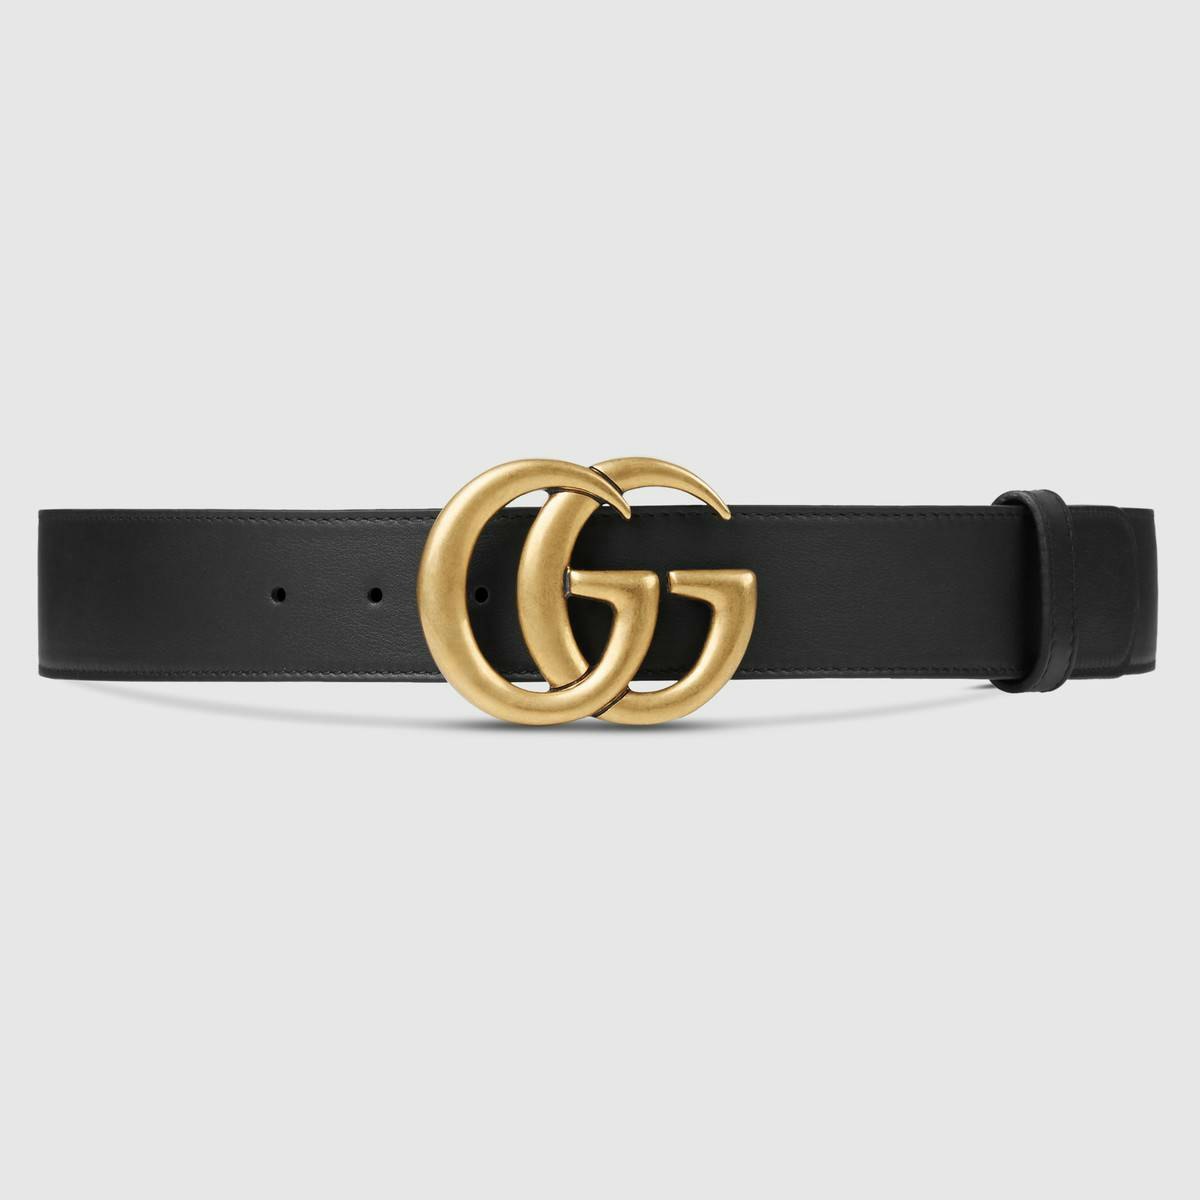 cg belt price